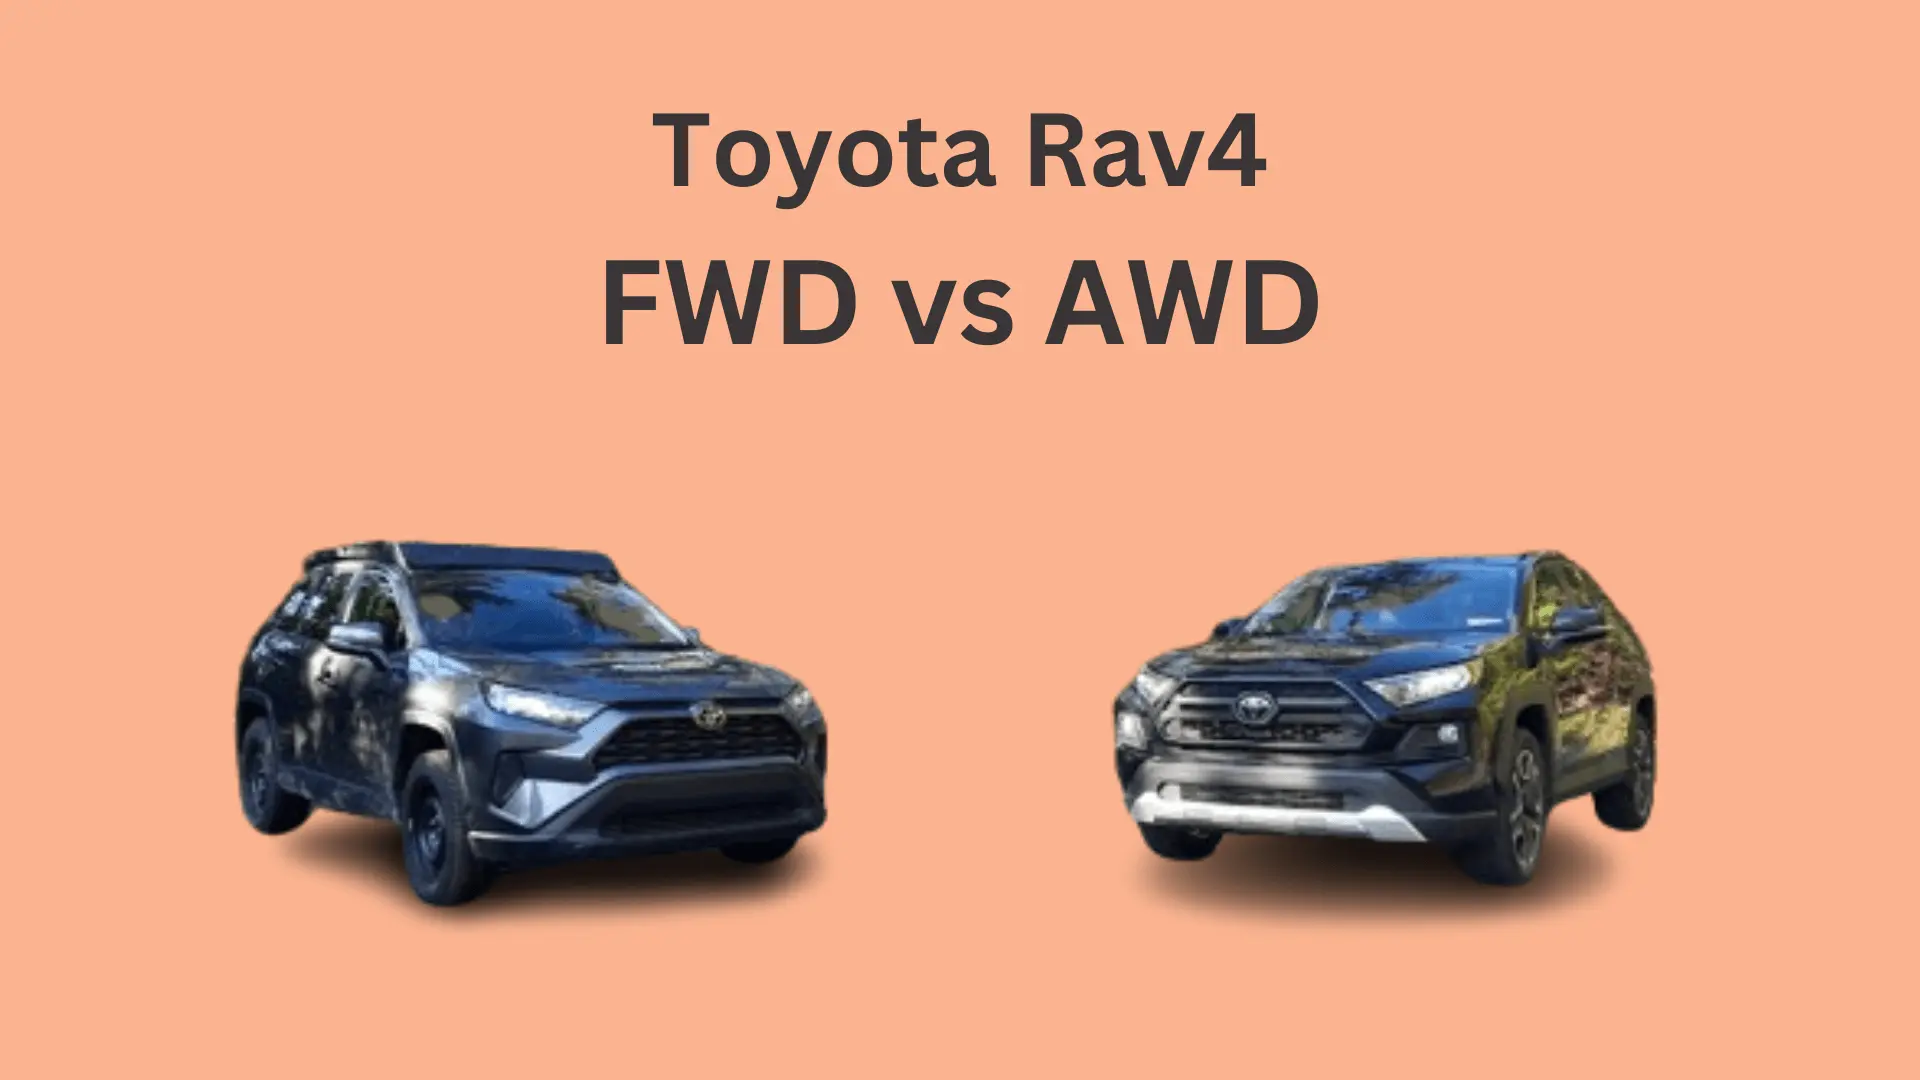 Toyota Rav4 FWD vs AWD